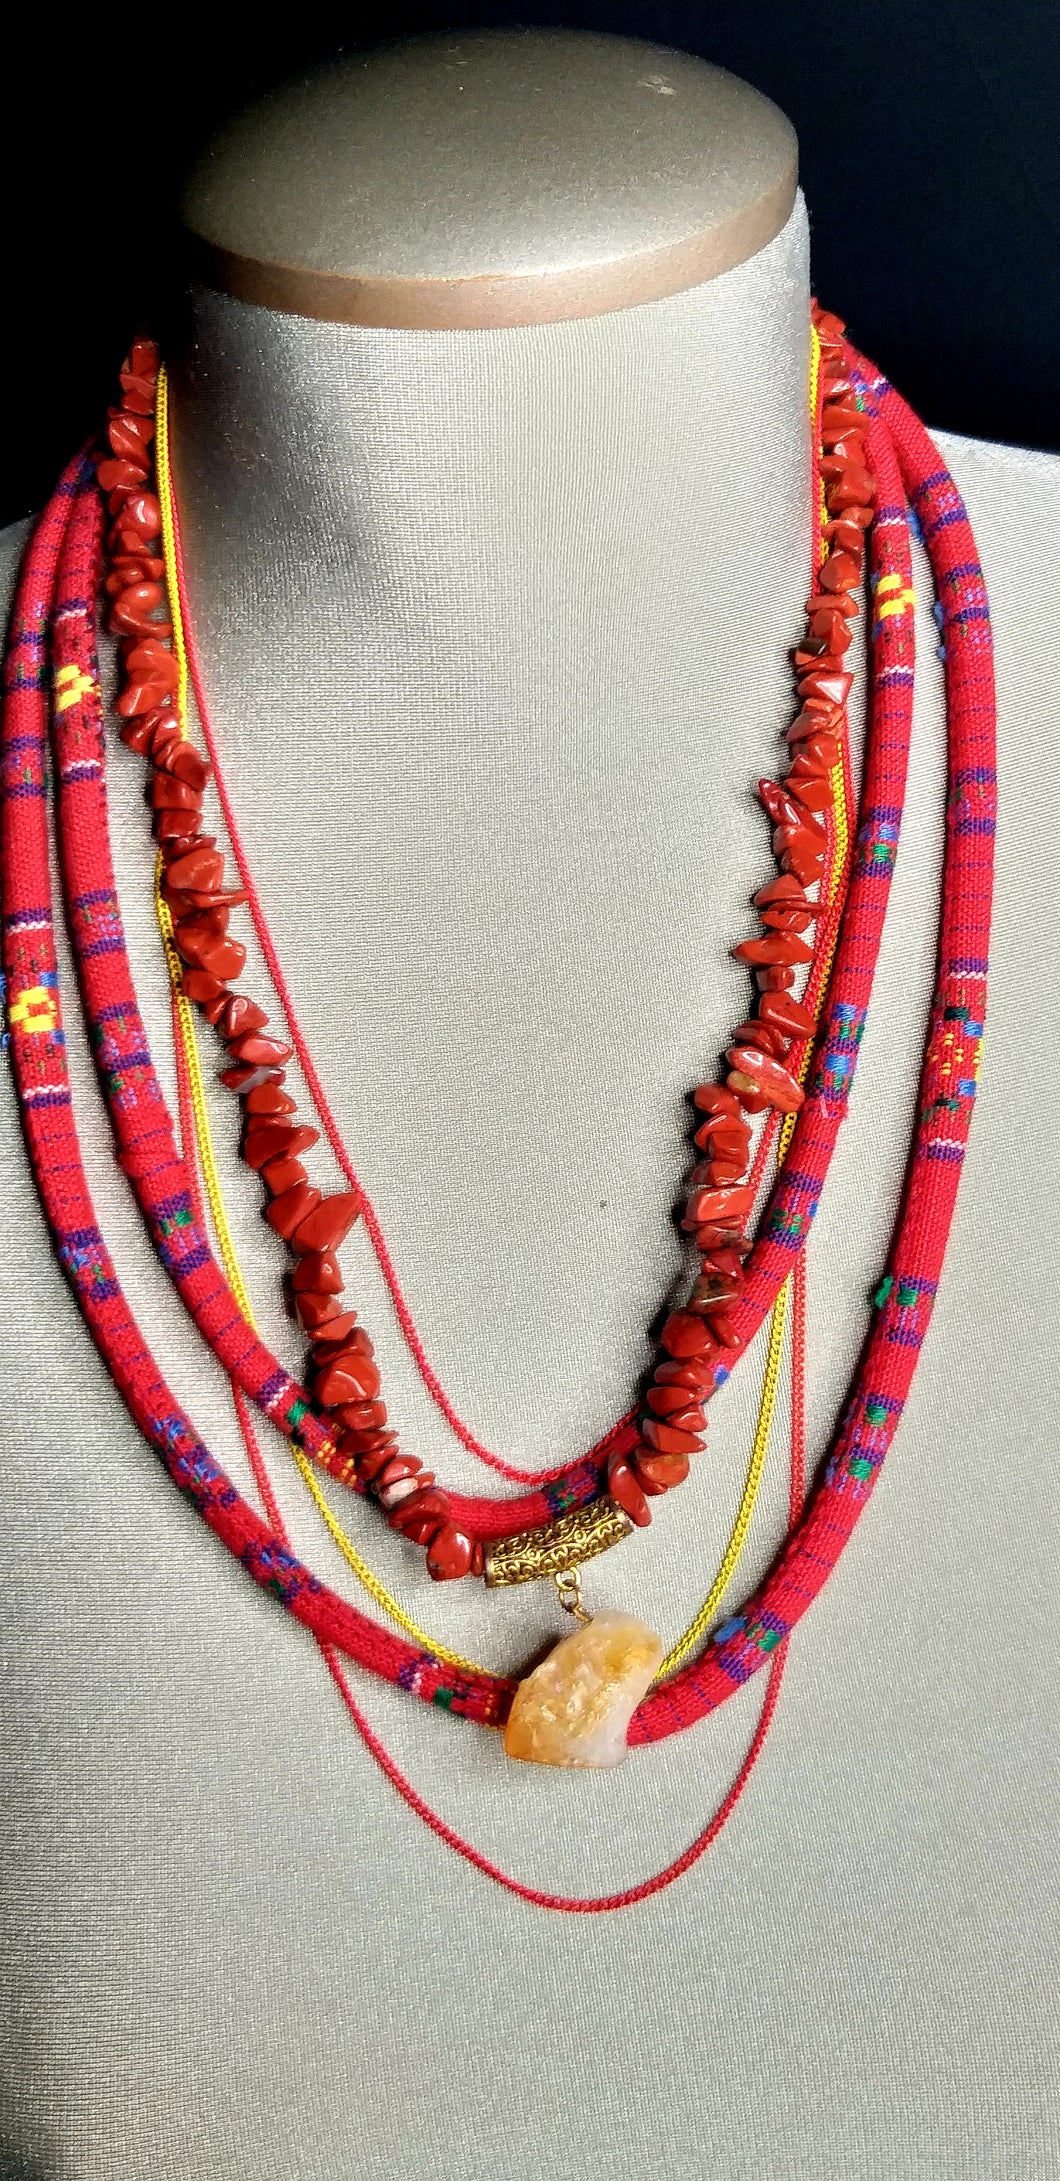 Red Jasper w/Citrine Pendant Layered Necklace